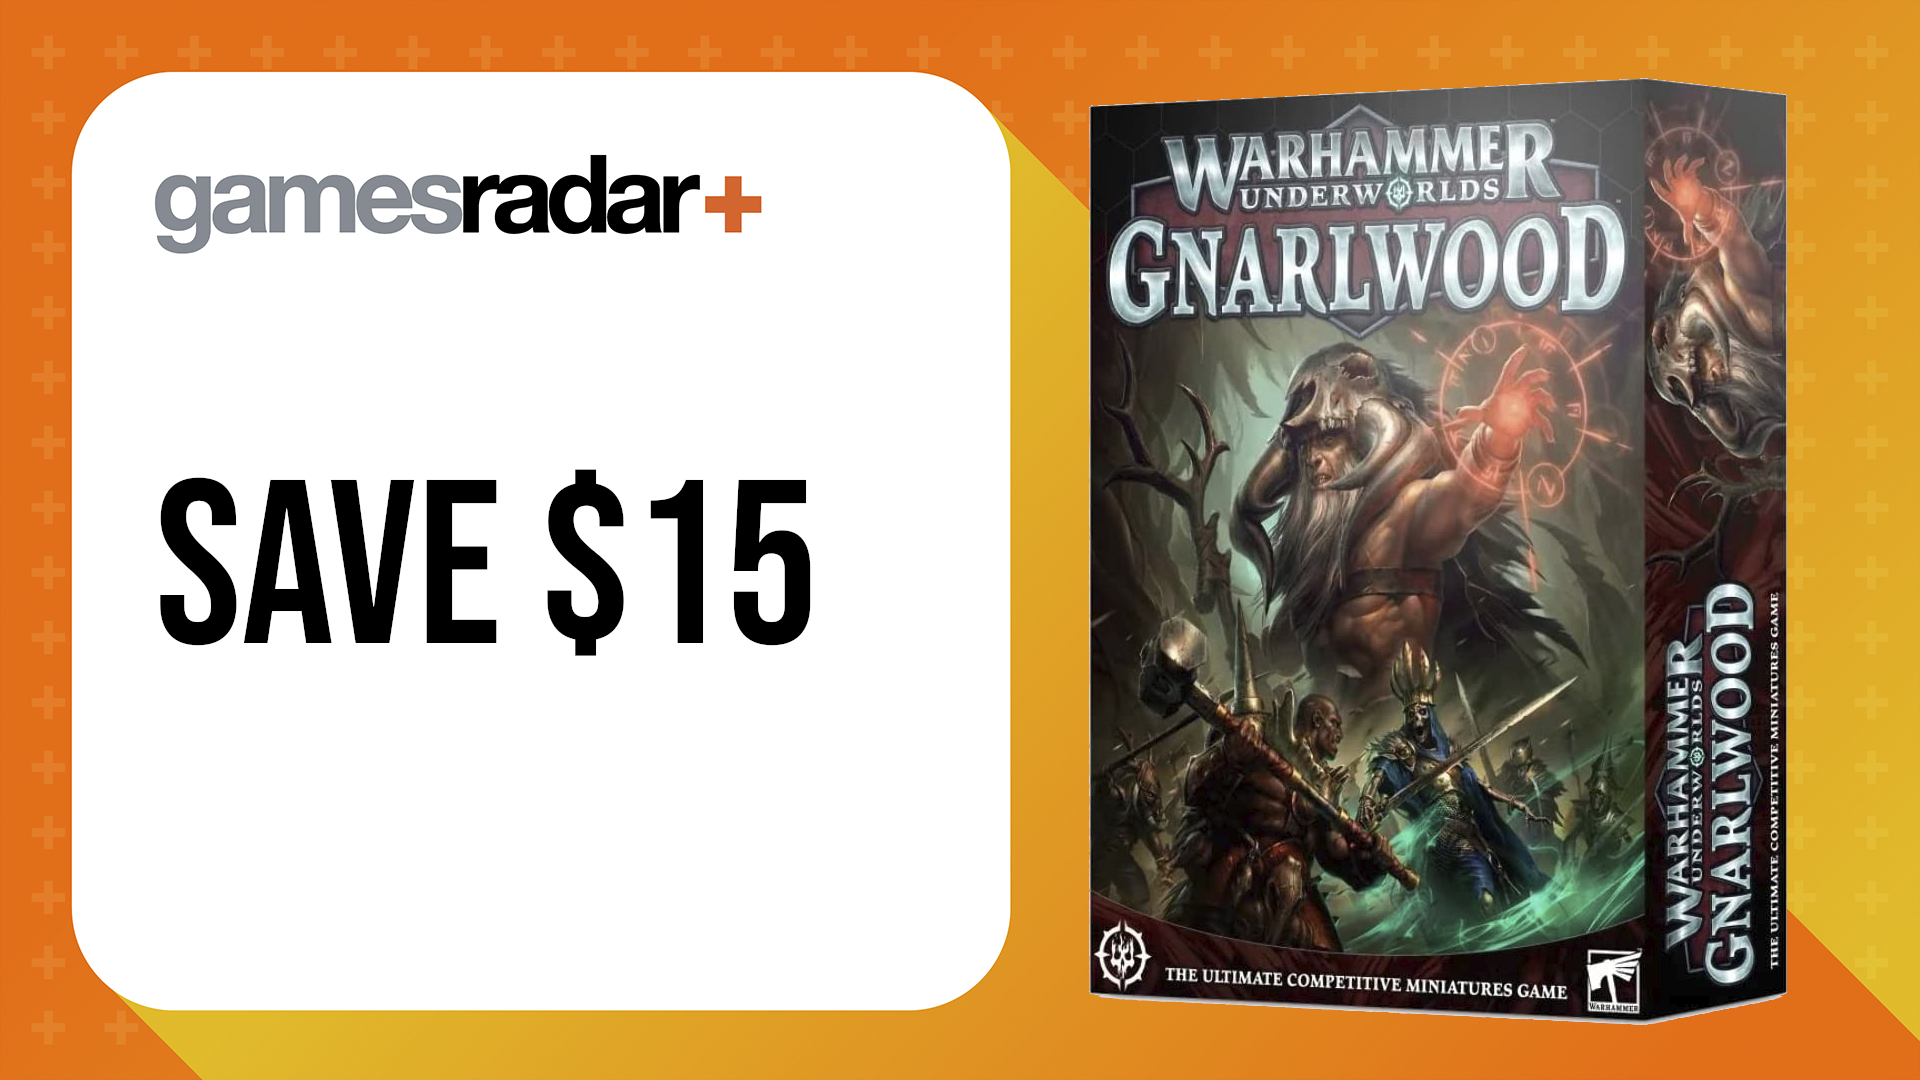 Black Friday board game deals with Warhammer Underworlds: Gnarlwood